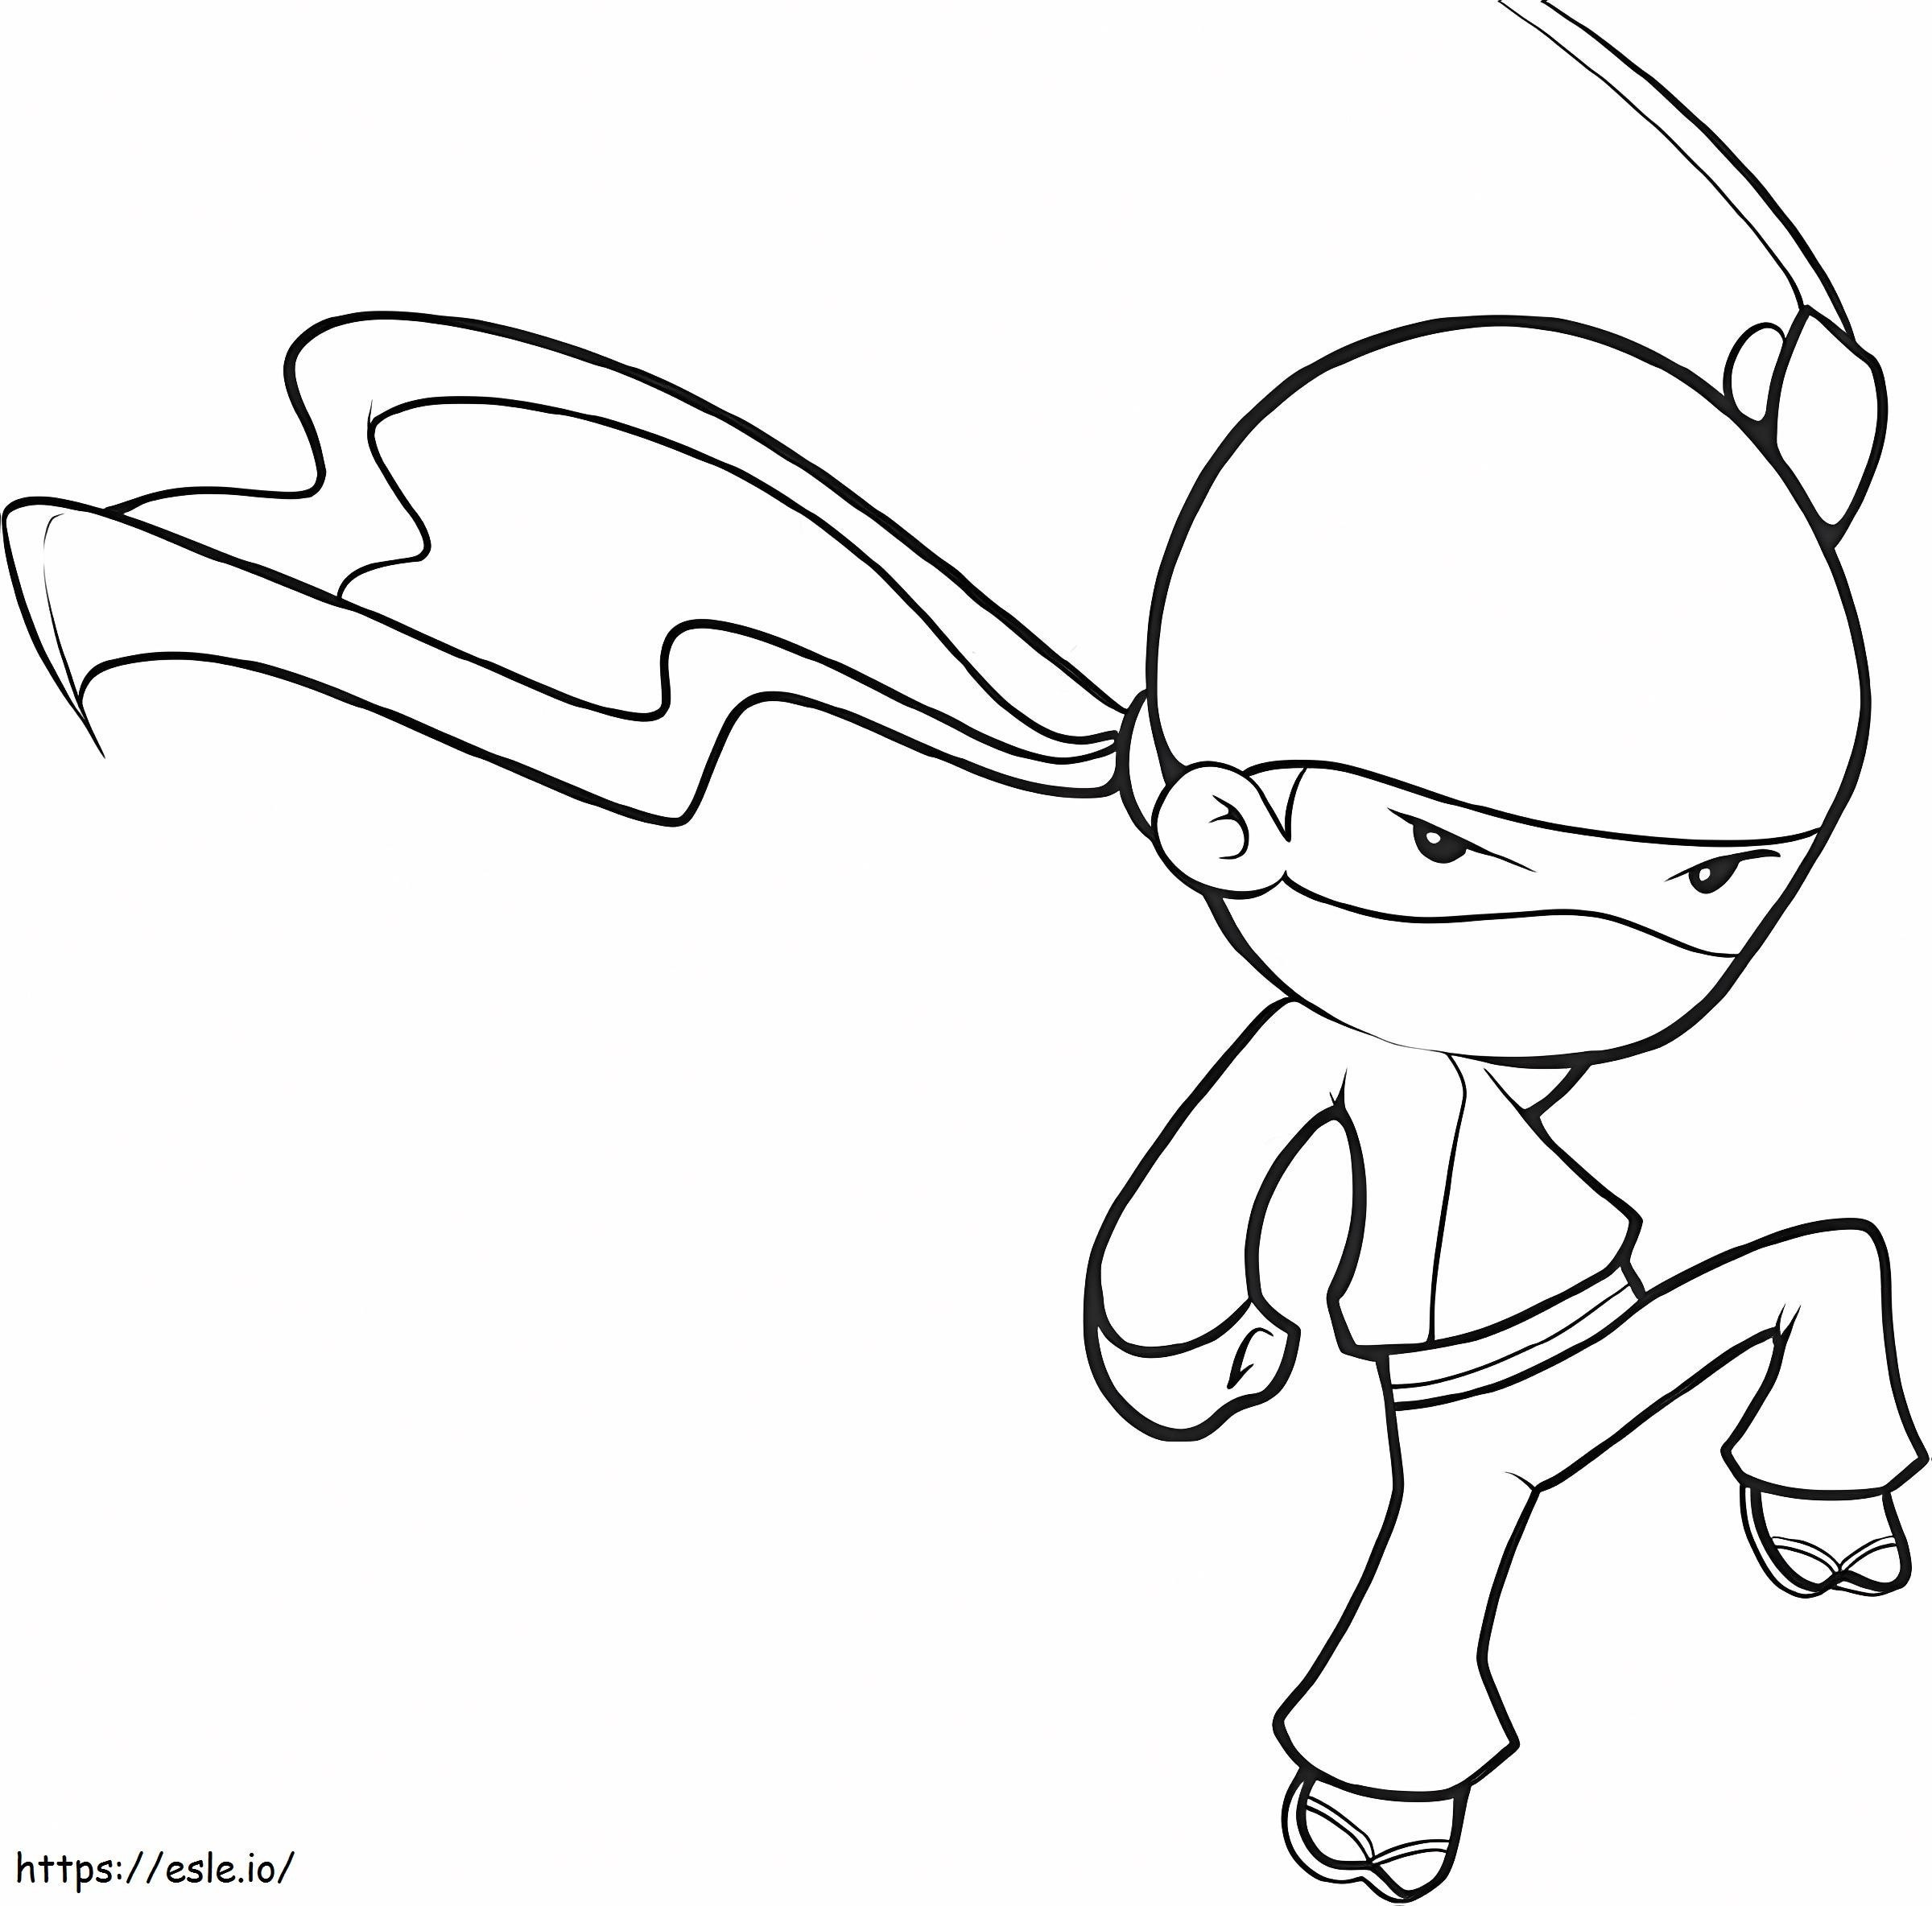 Ninja 1 coloring page